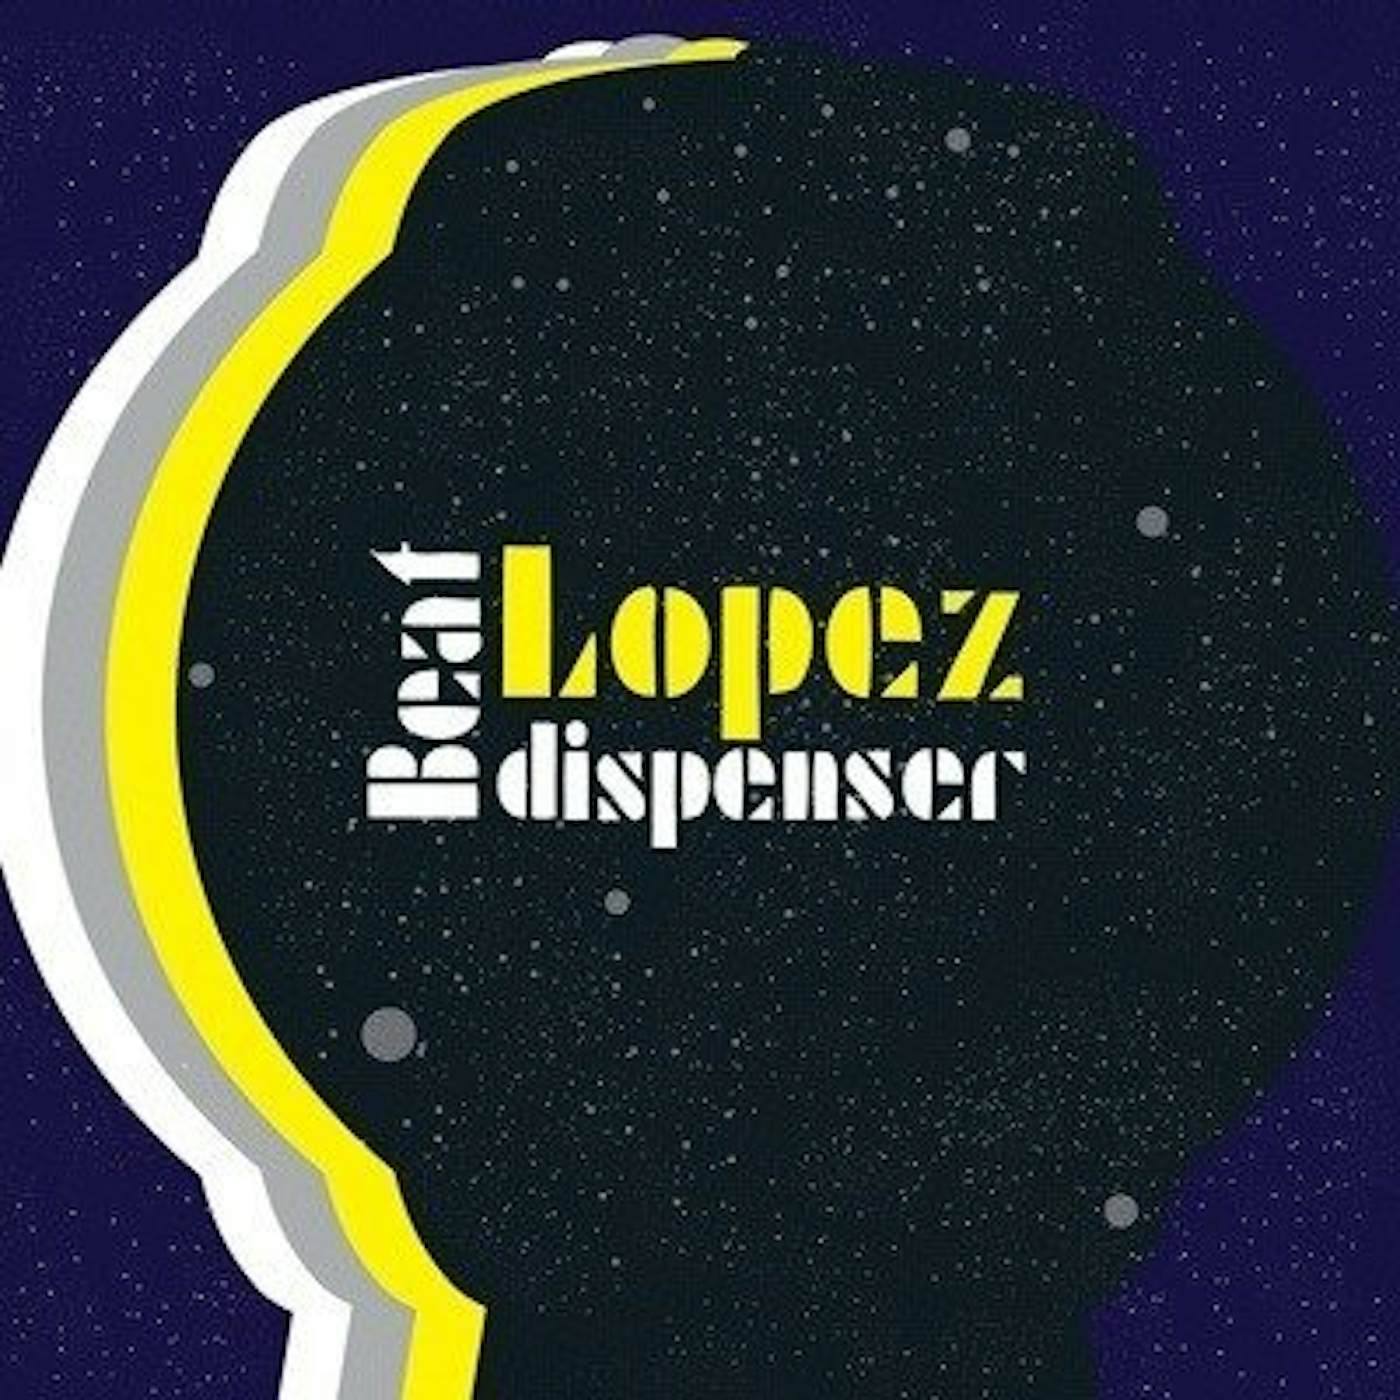 Lopez BEAT DISPENSER Vinyl Record - UK Release